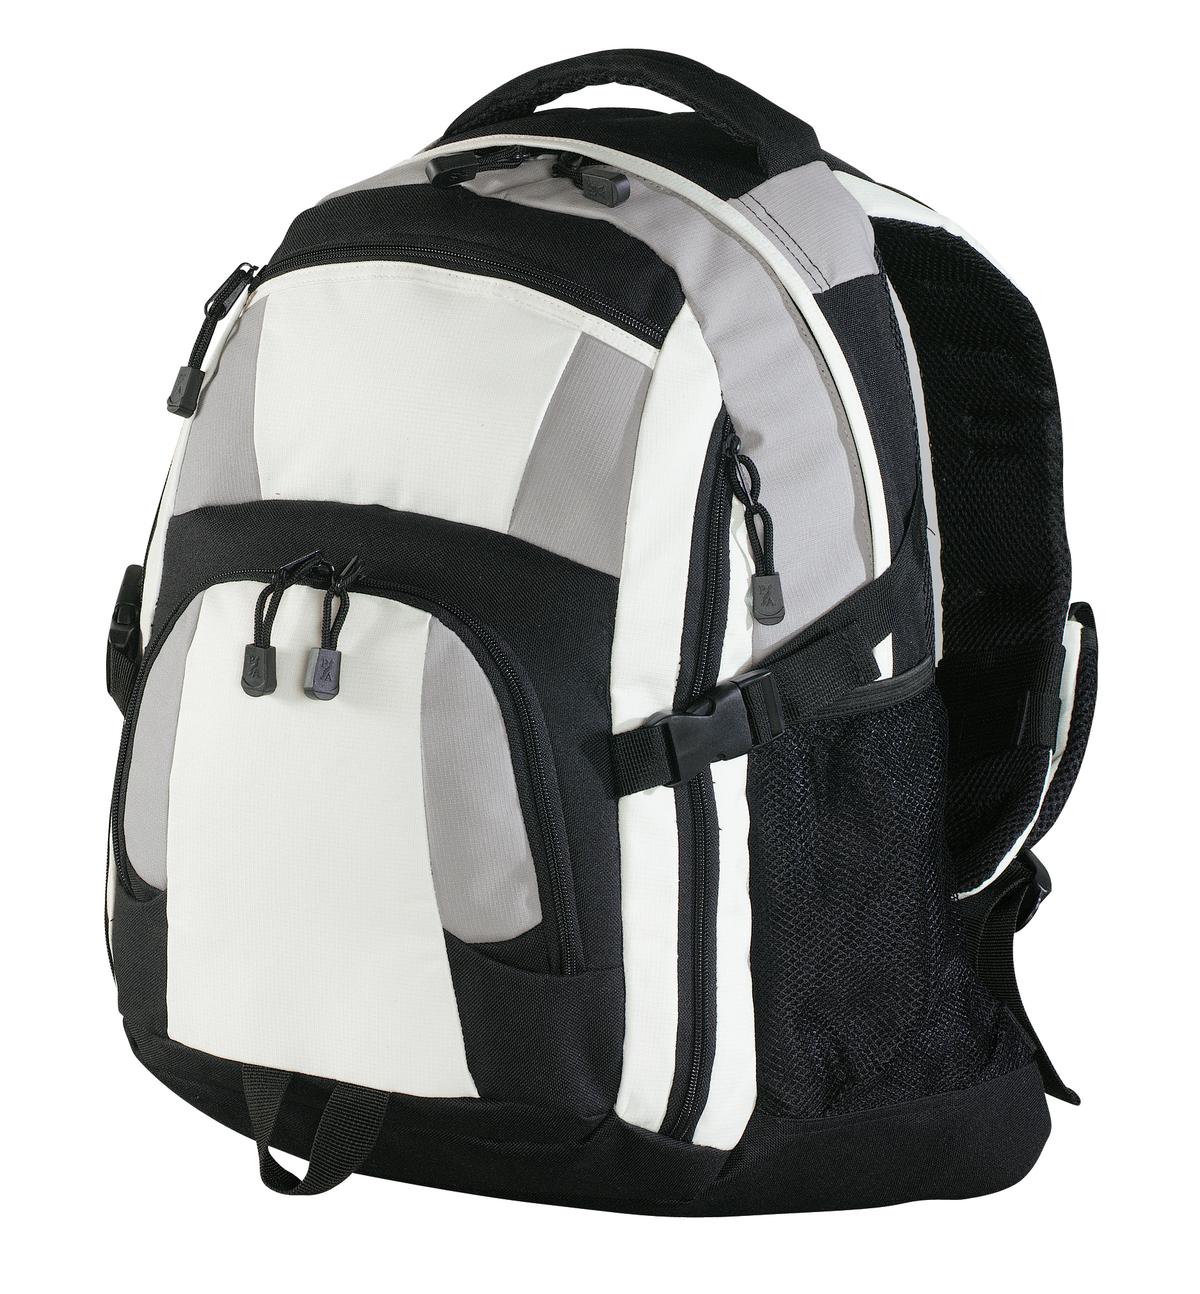 Port Authority® Urban Backpack. BG77